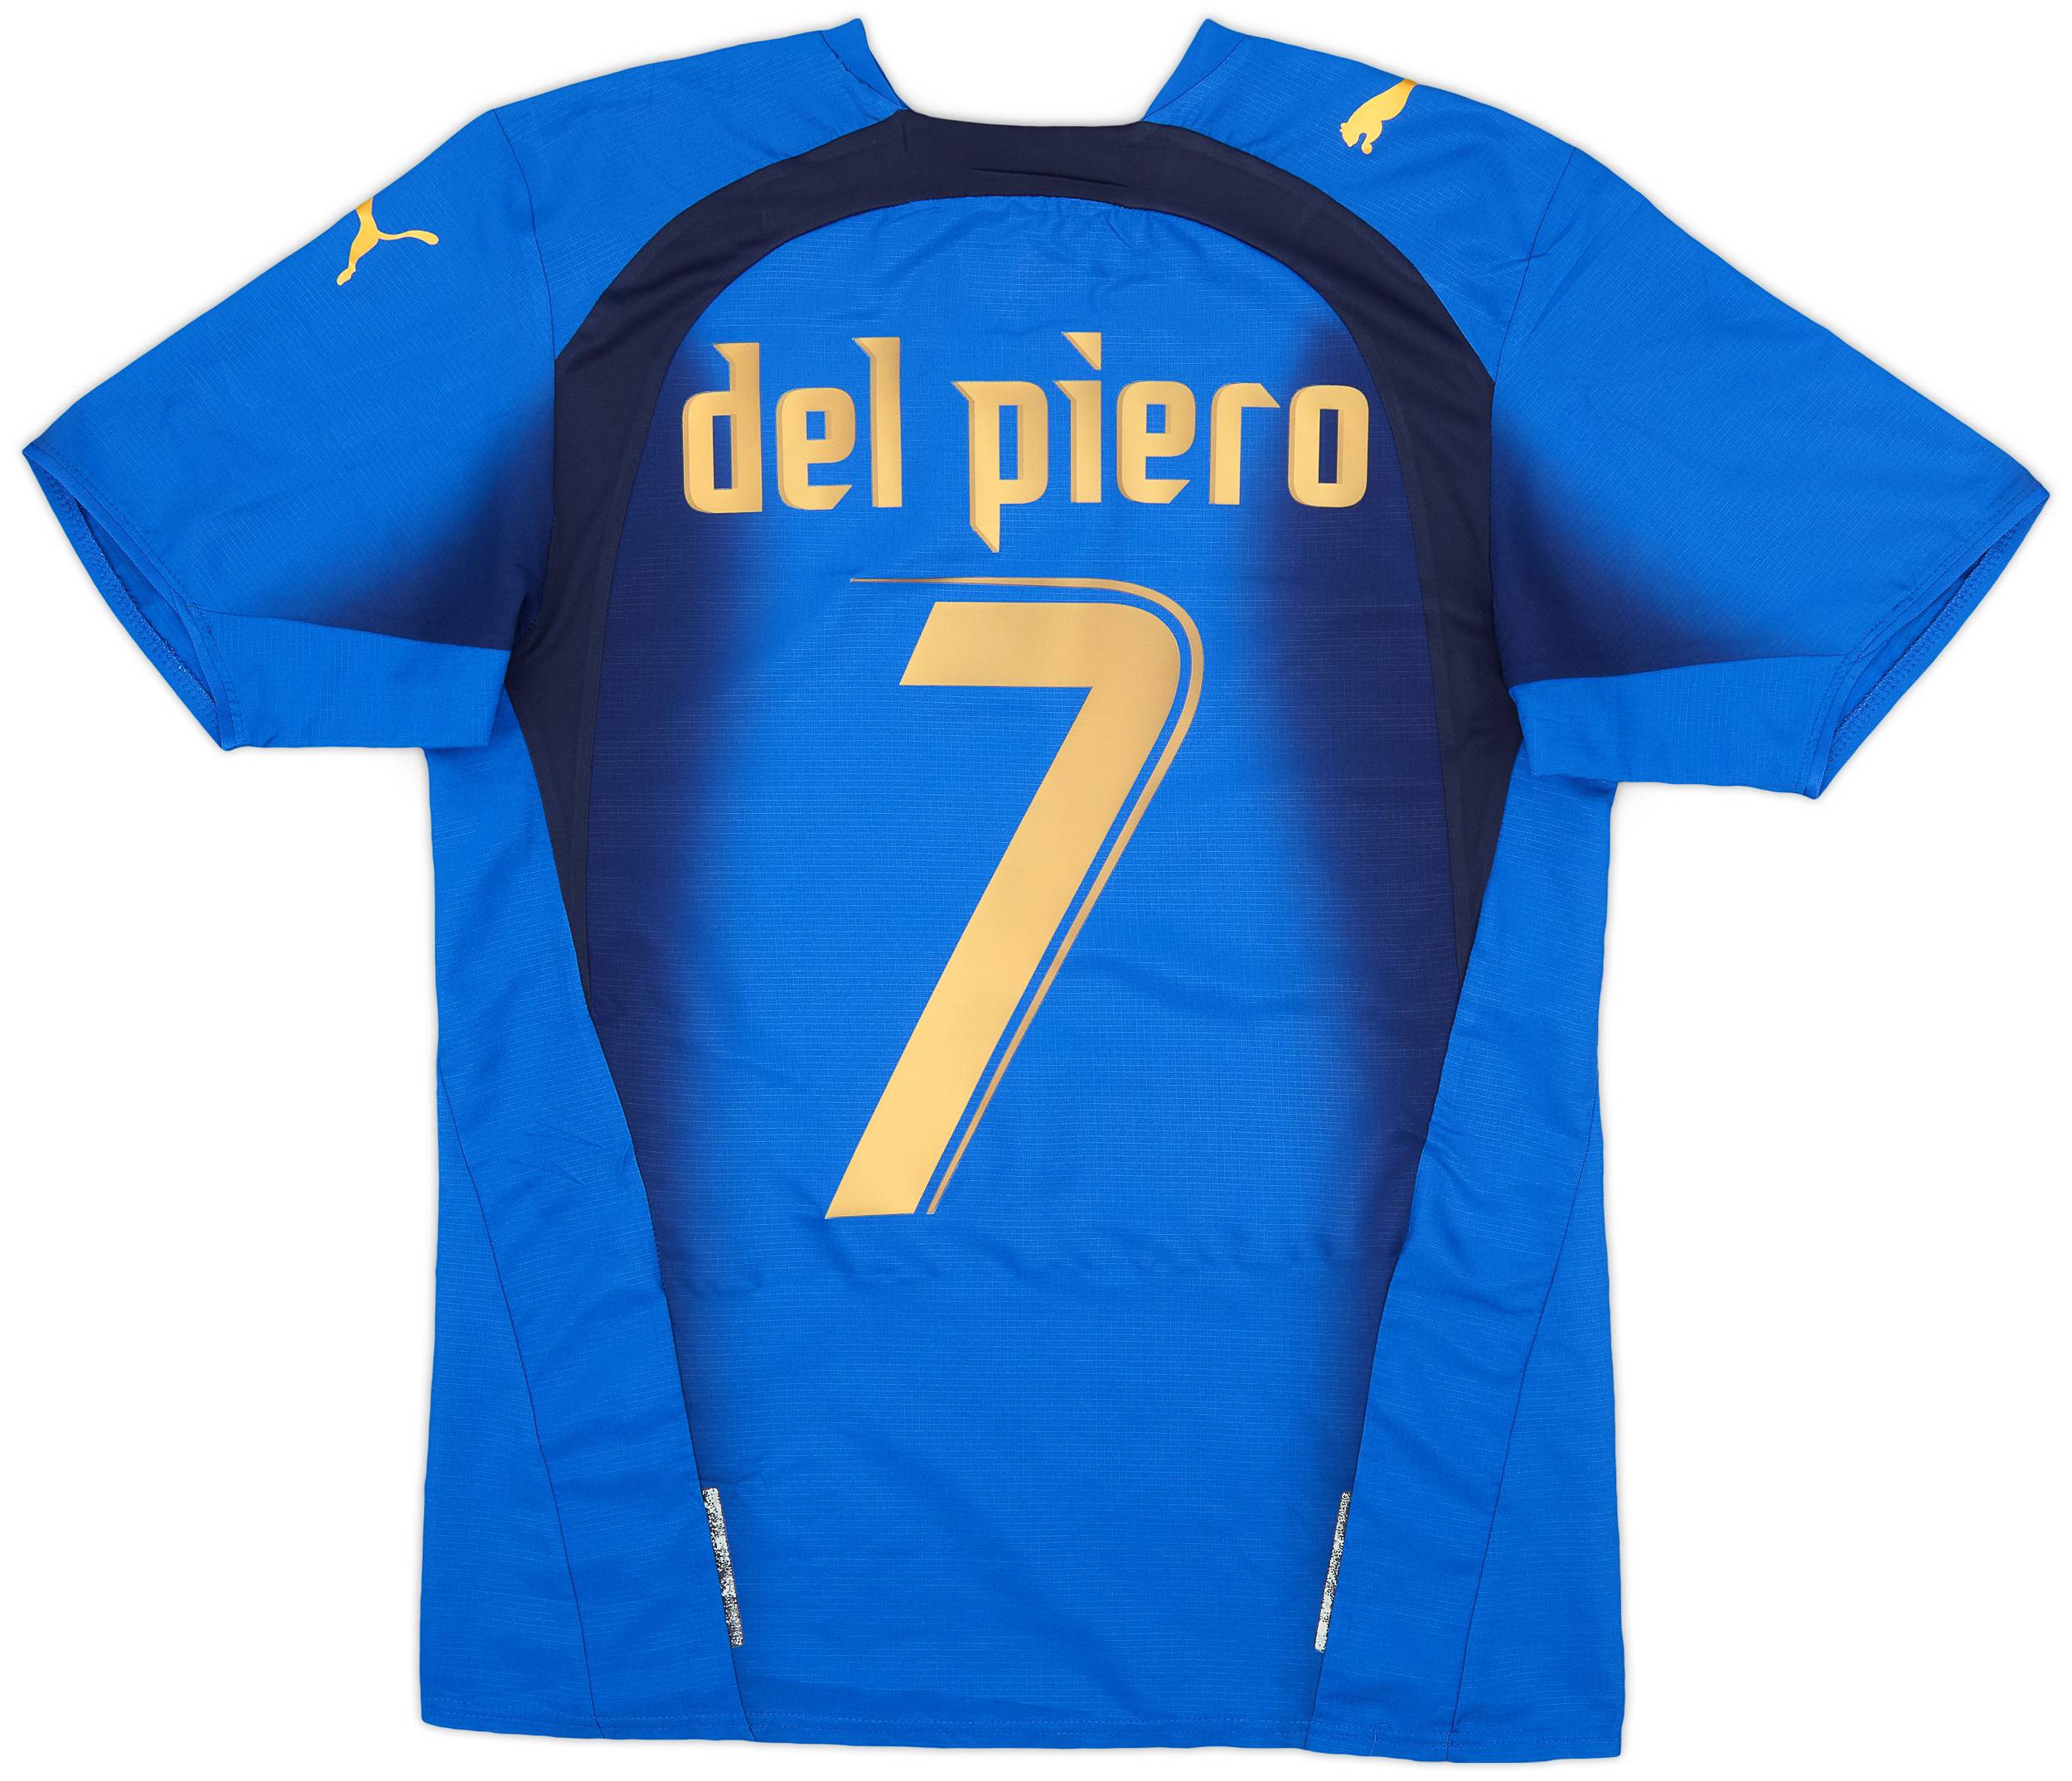 2006 Italy Home Shirt Del Piero #7 - 8/10 - (S)